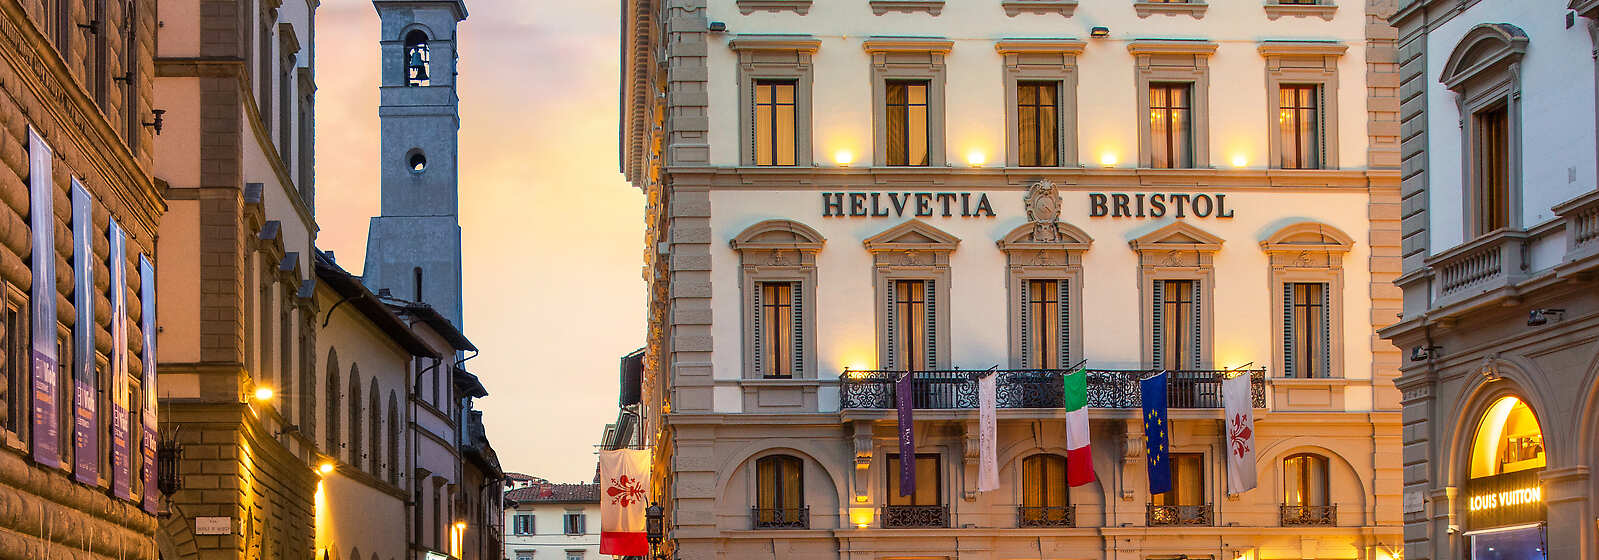 Helvetia & Bristol Firenze, Fine Hotels + Resorts